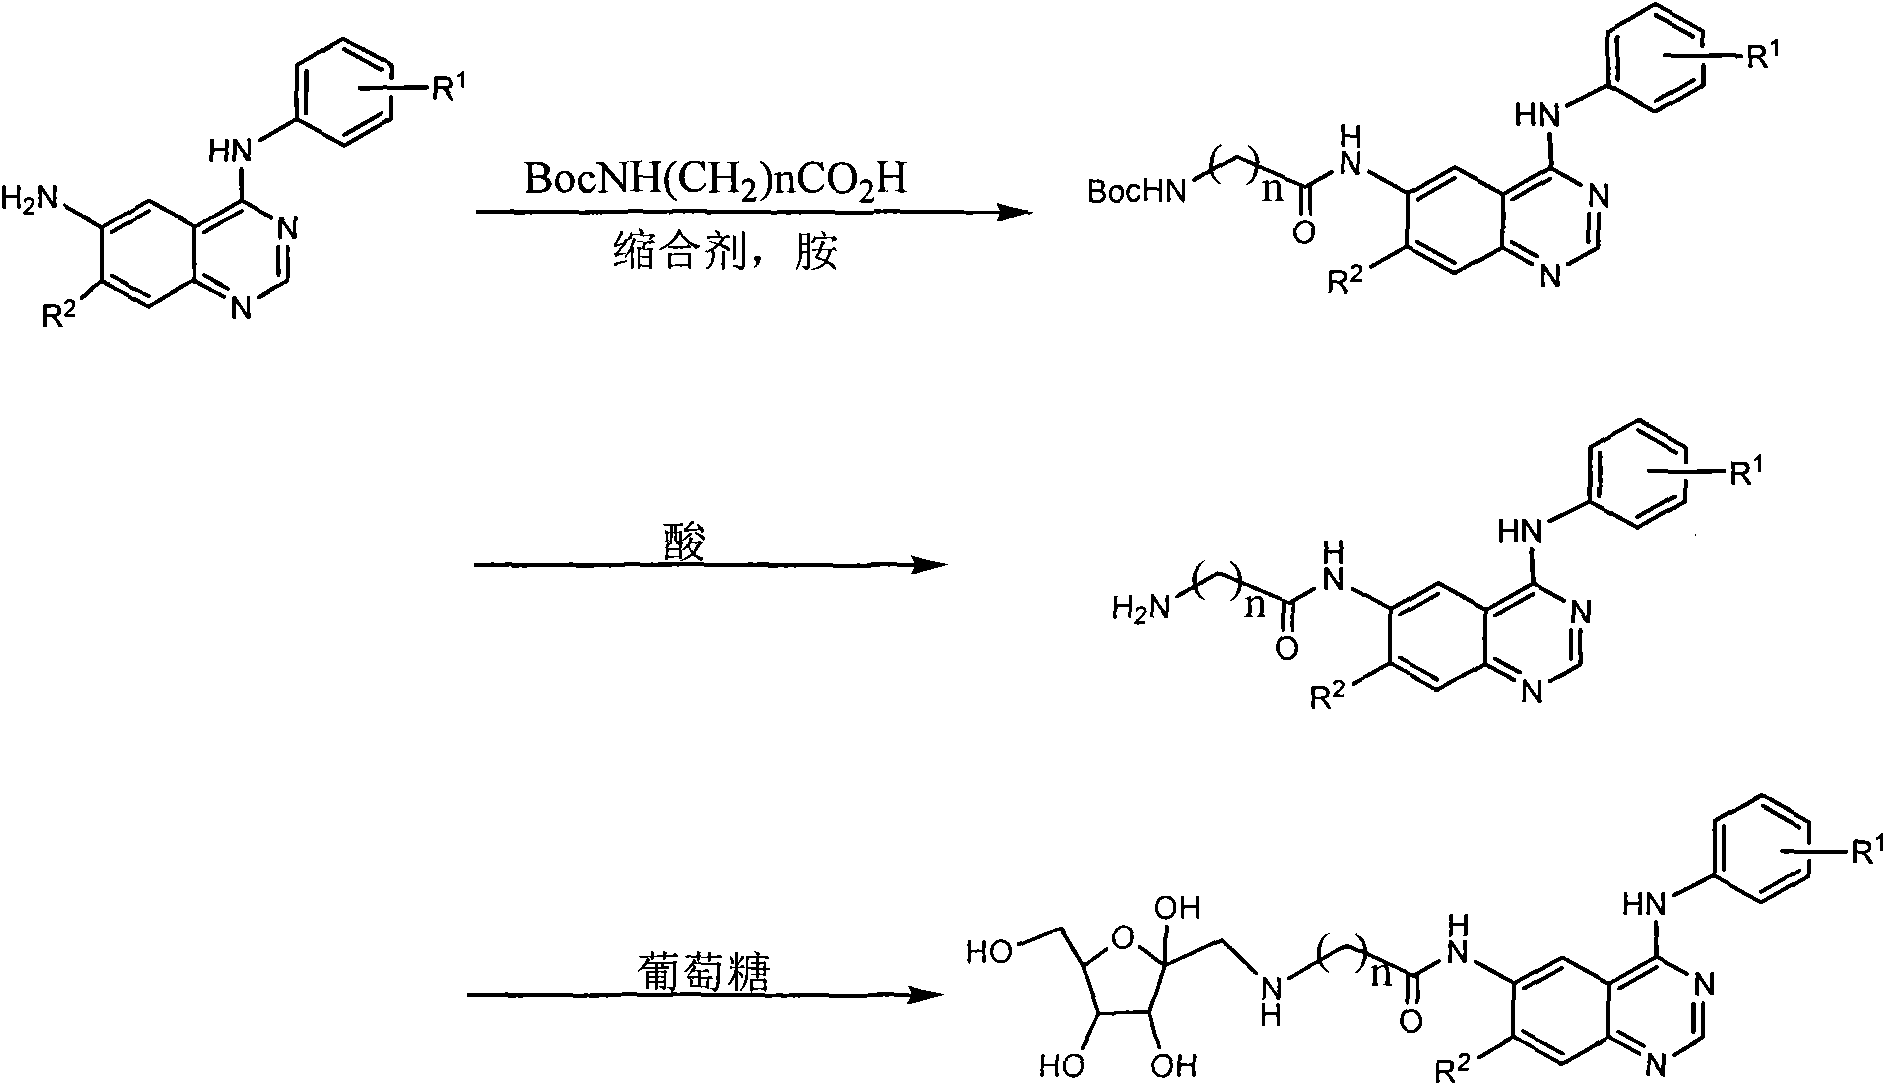 6-fructosamine-4-arylamidoquinazoline derivative and purpose thereof